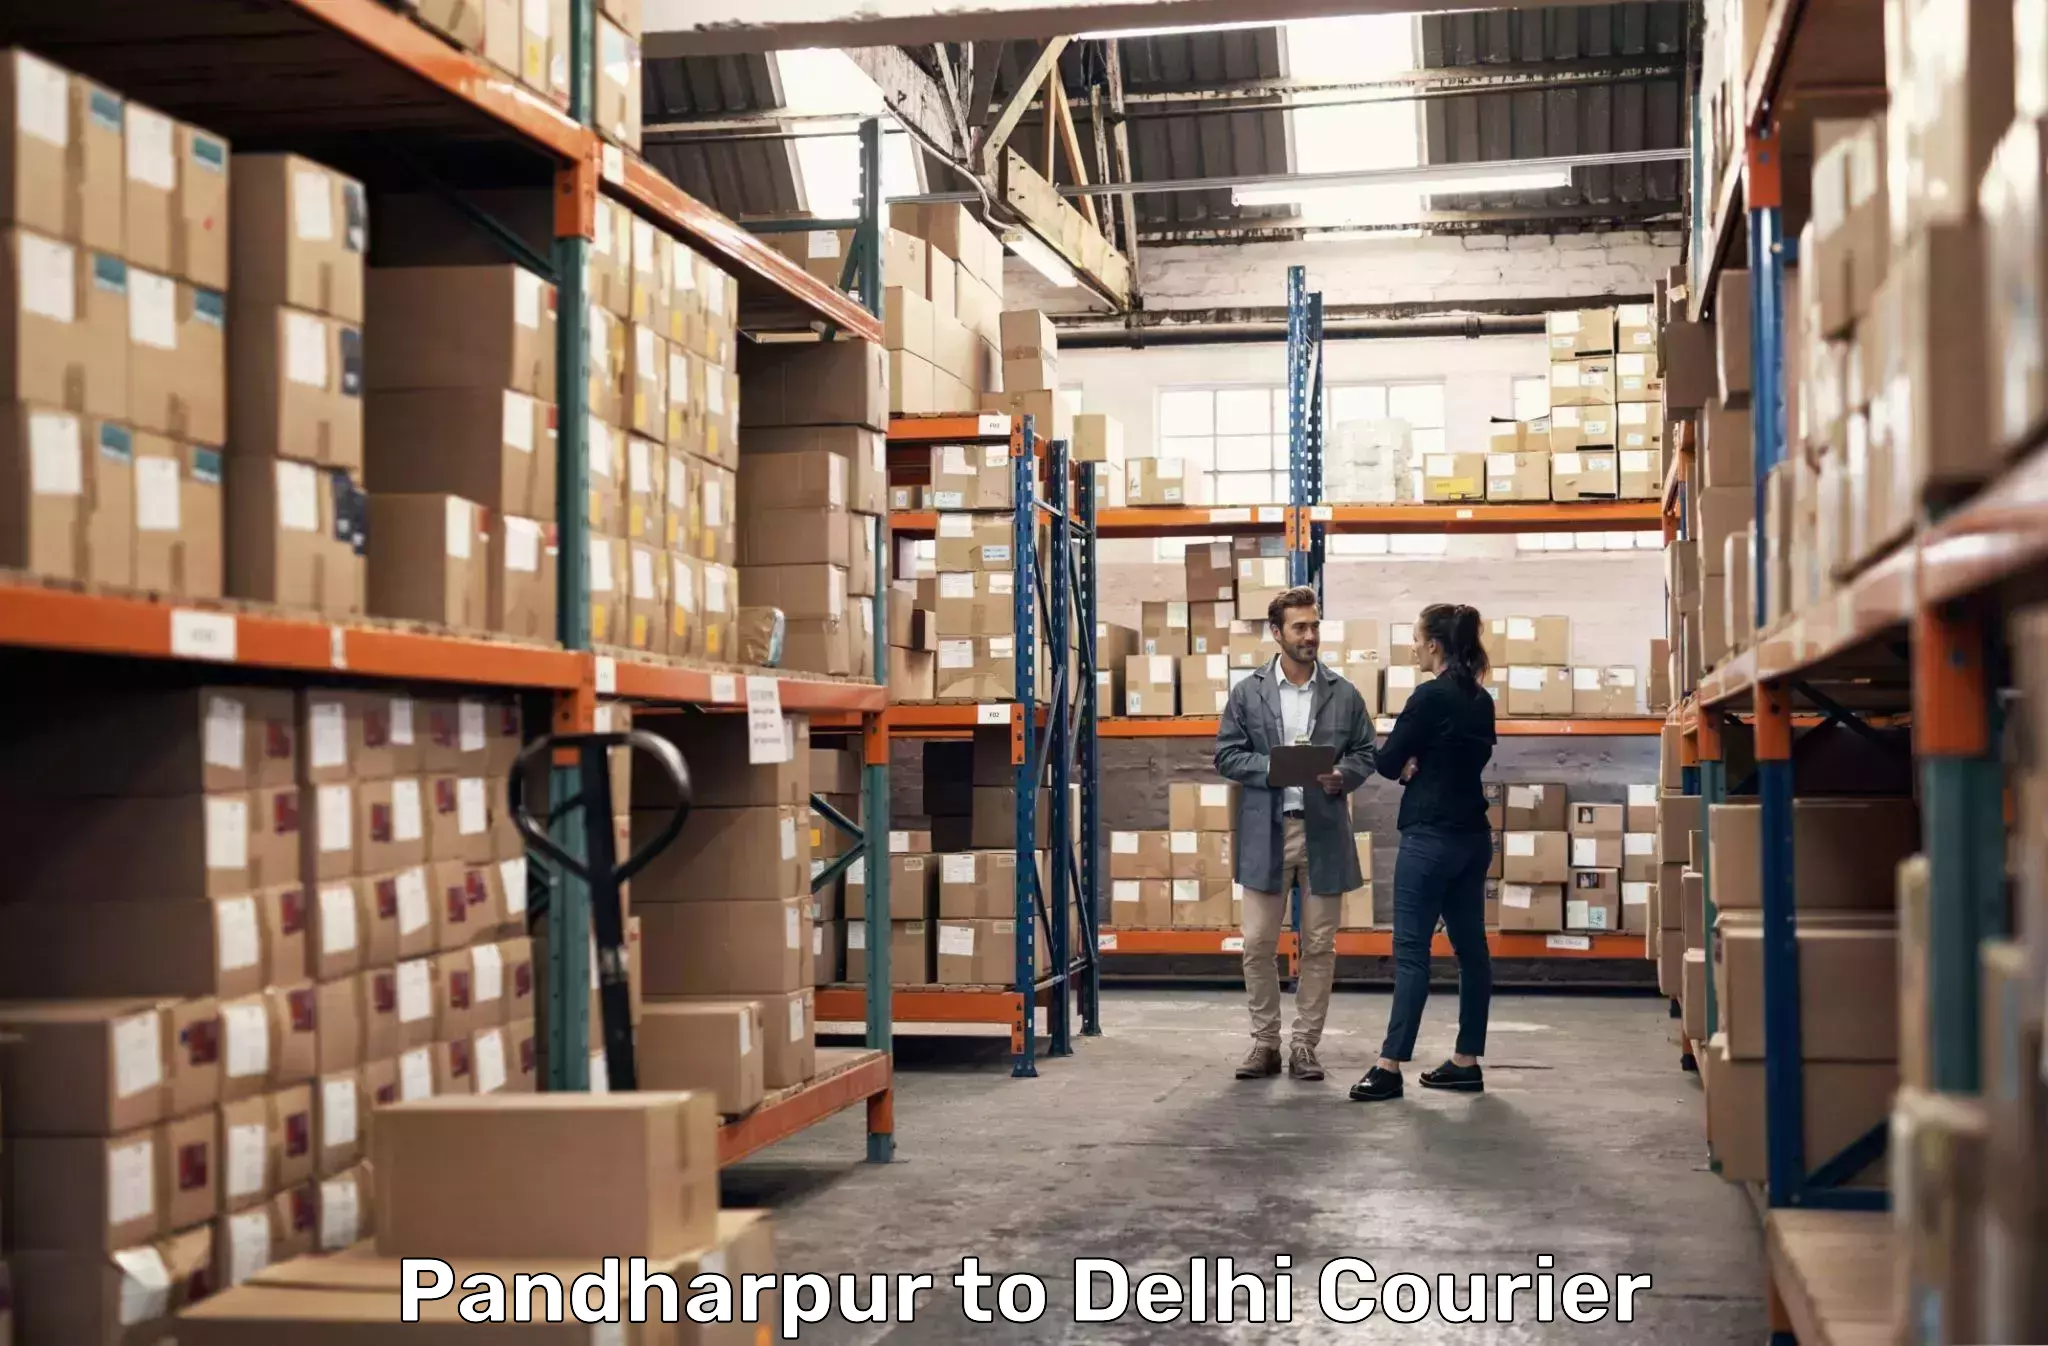 Professional courier handling Pandharpur to Delhi